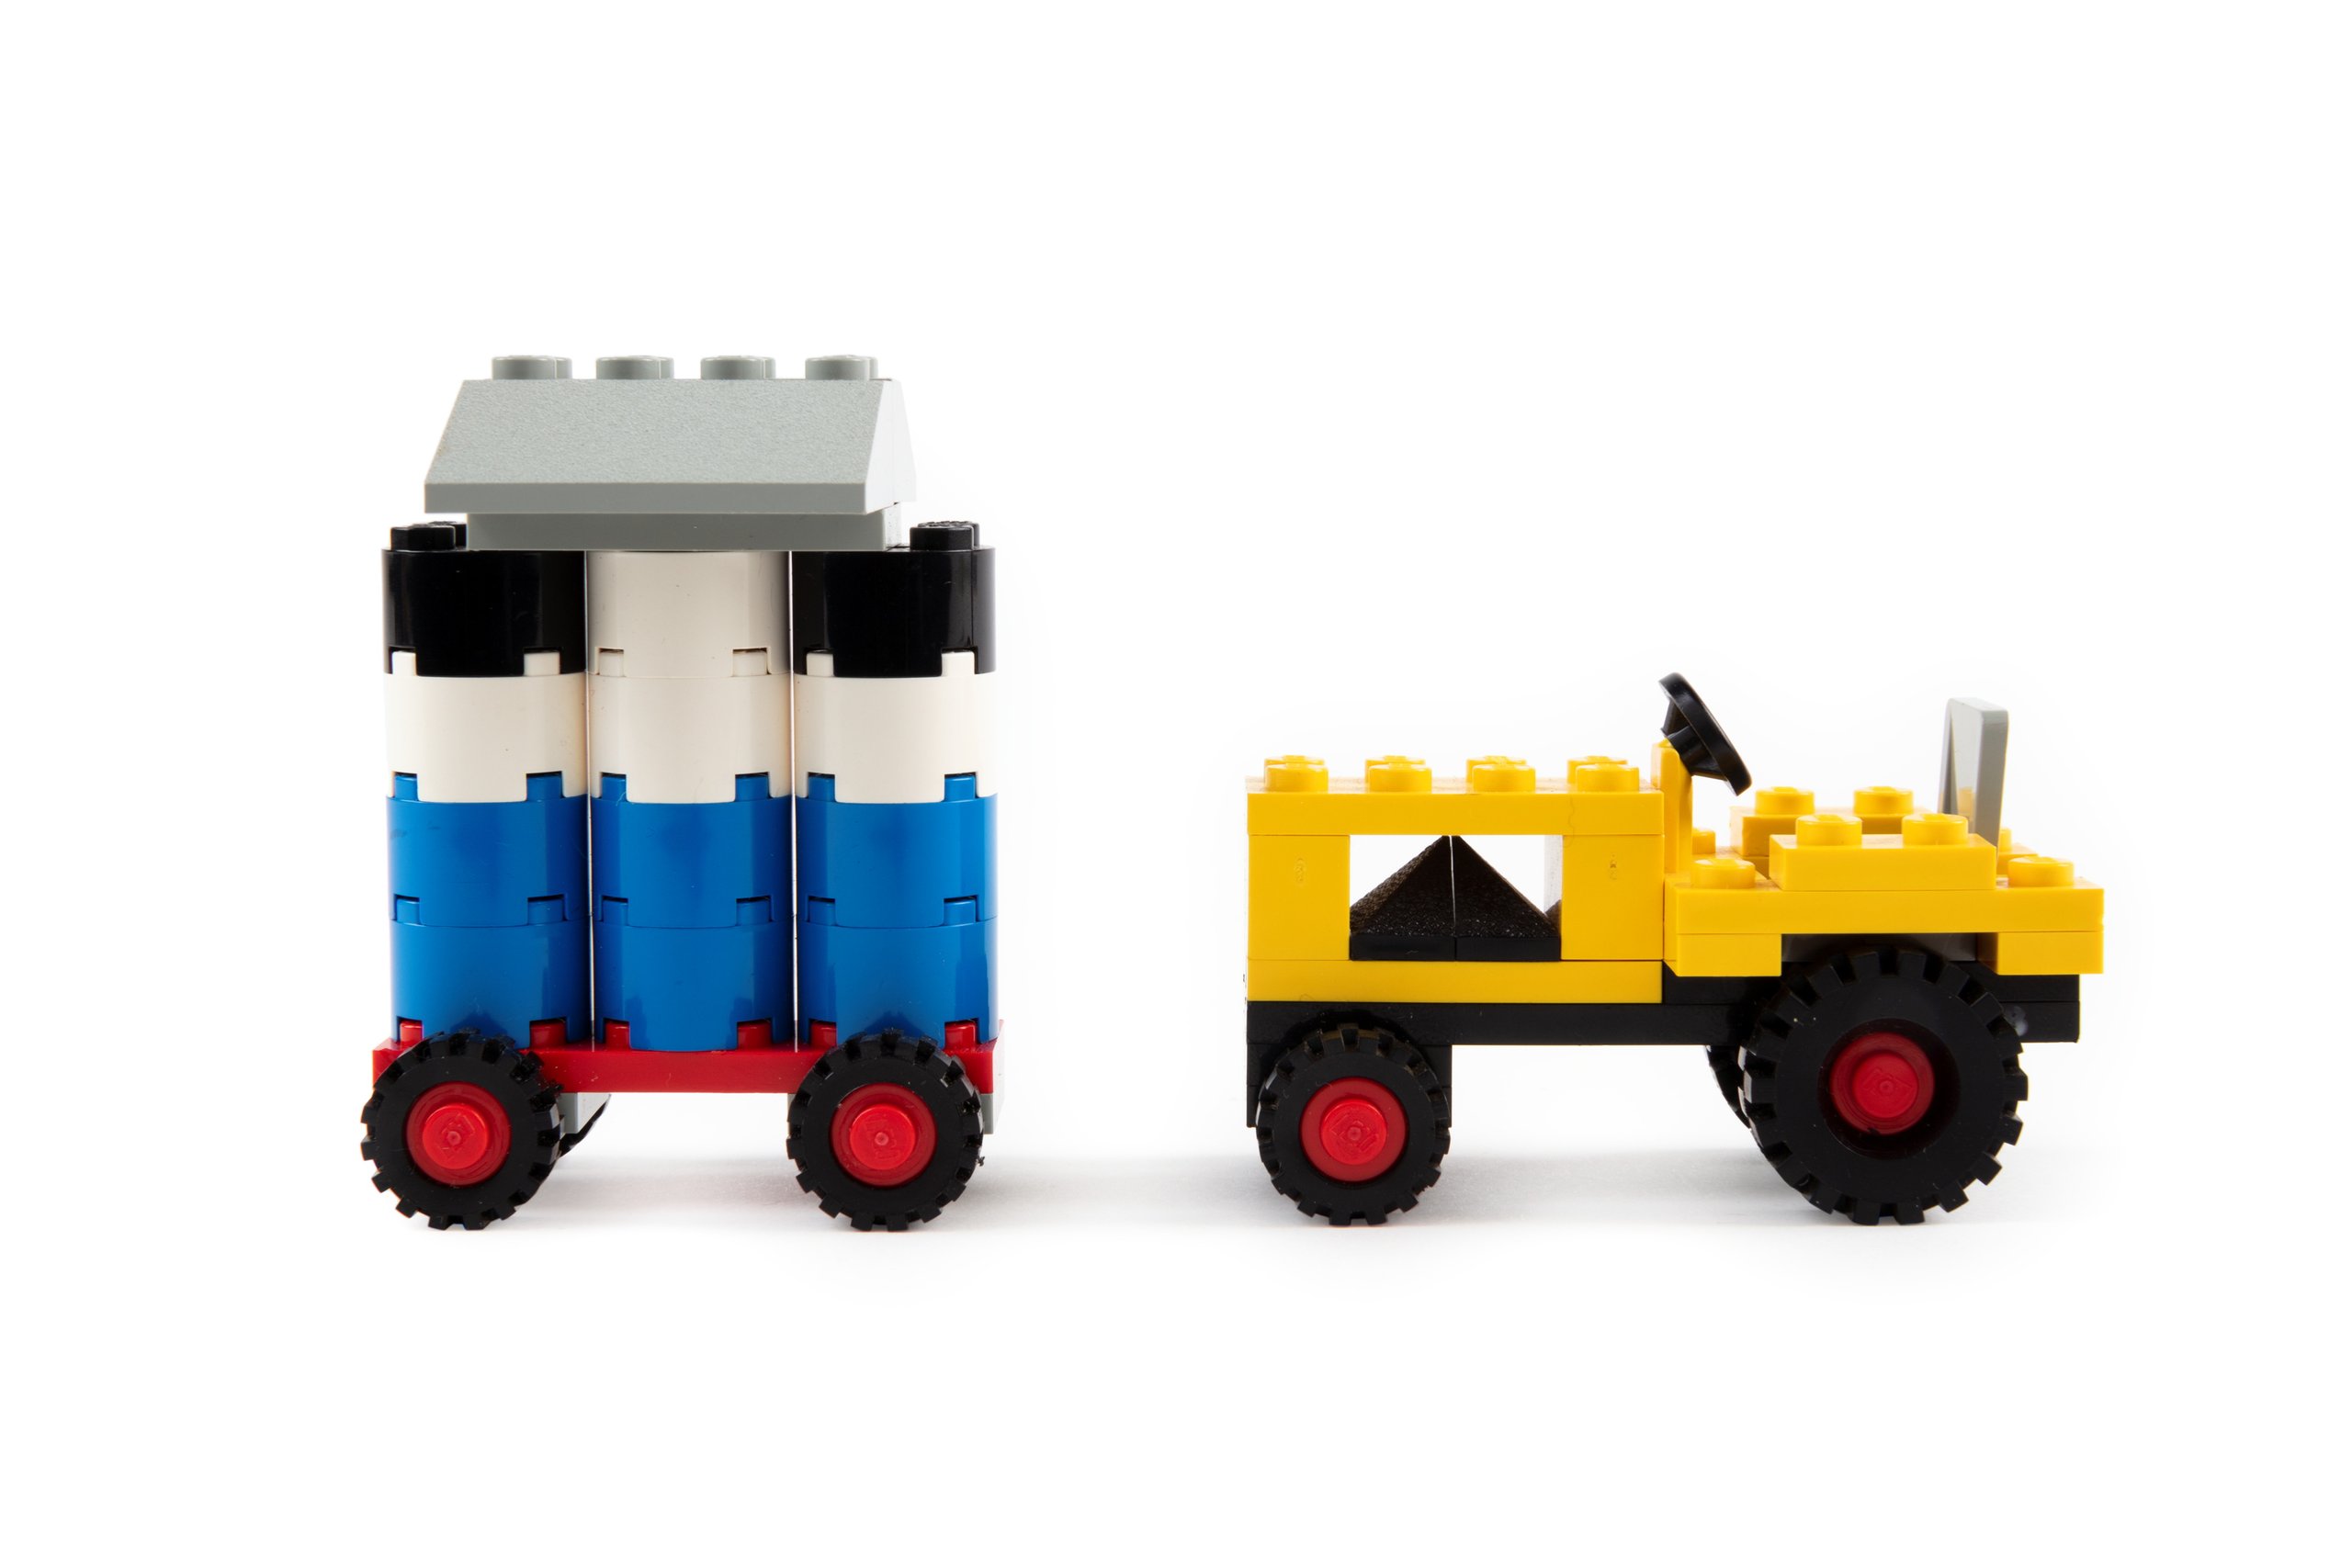 LEGO train set from Denmark